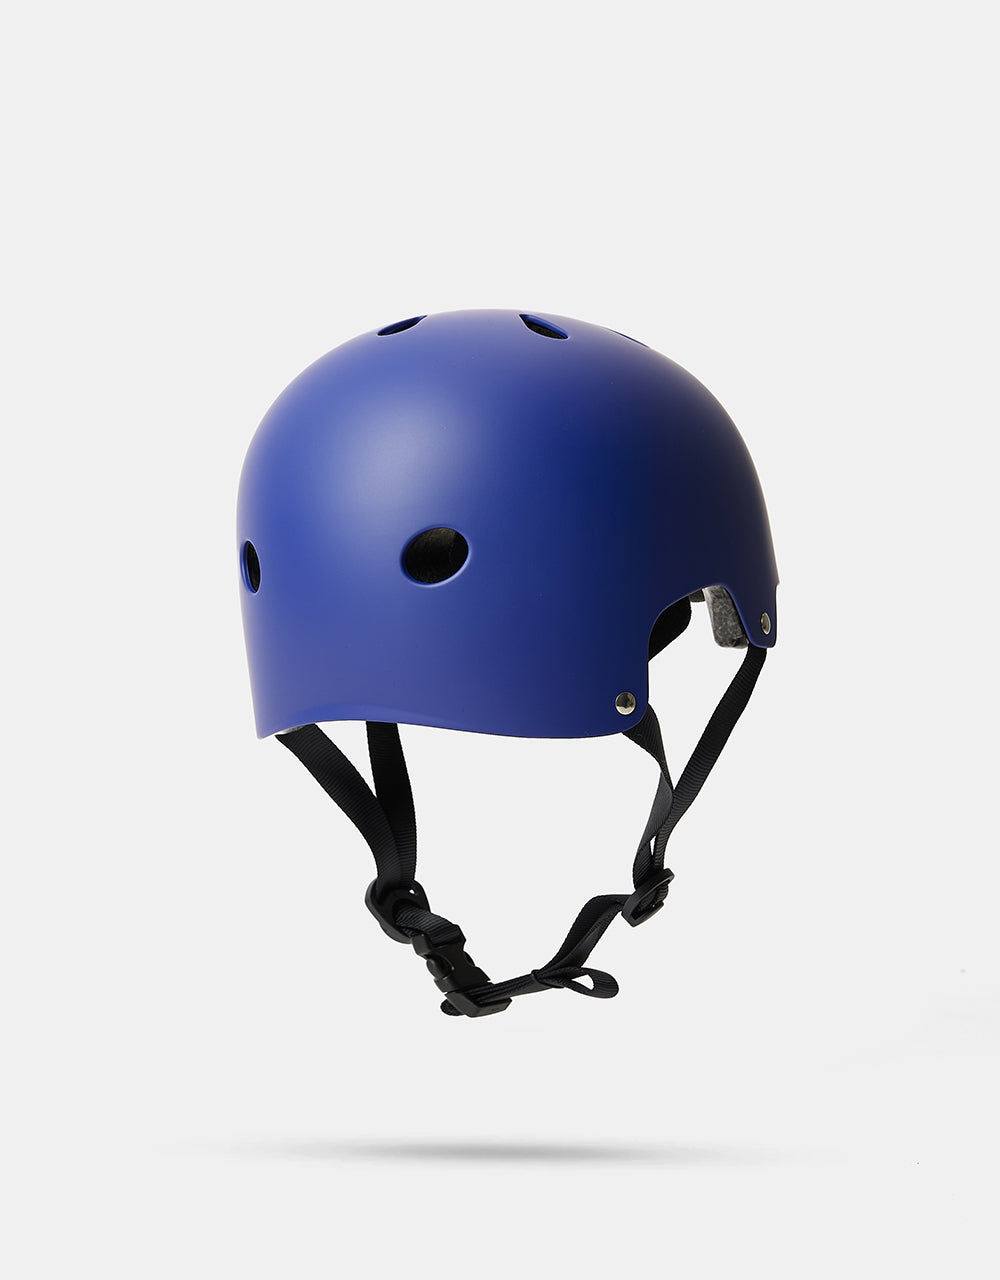 Route One Classic Helmet - Matte Navy